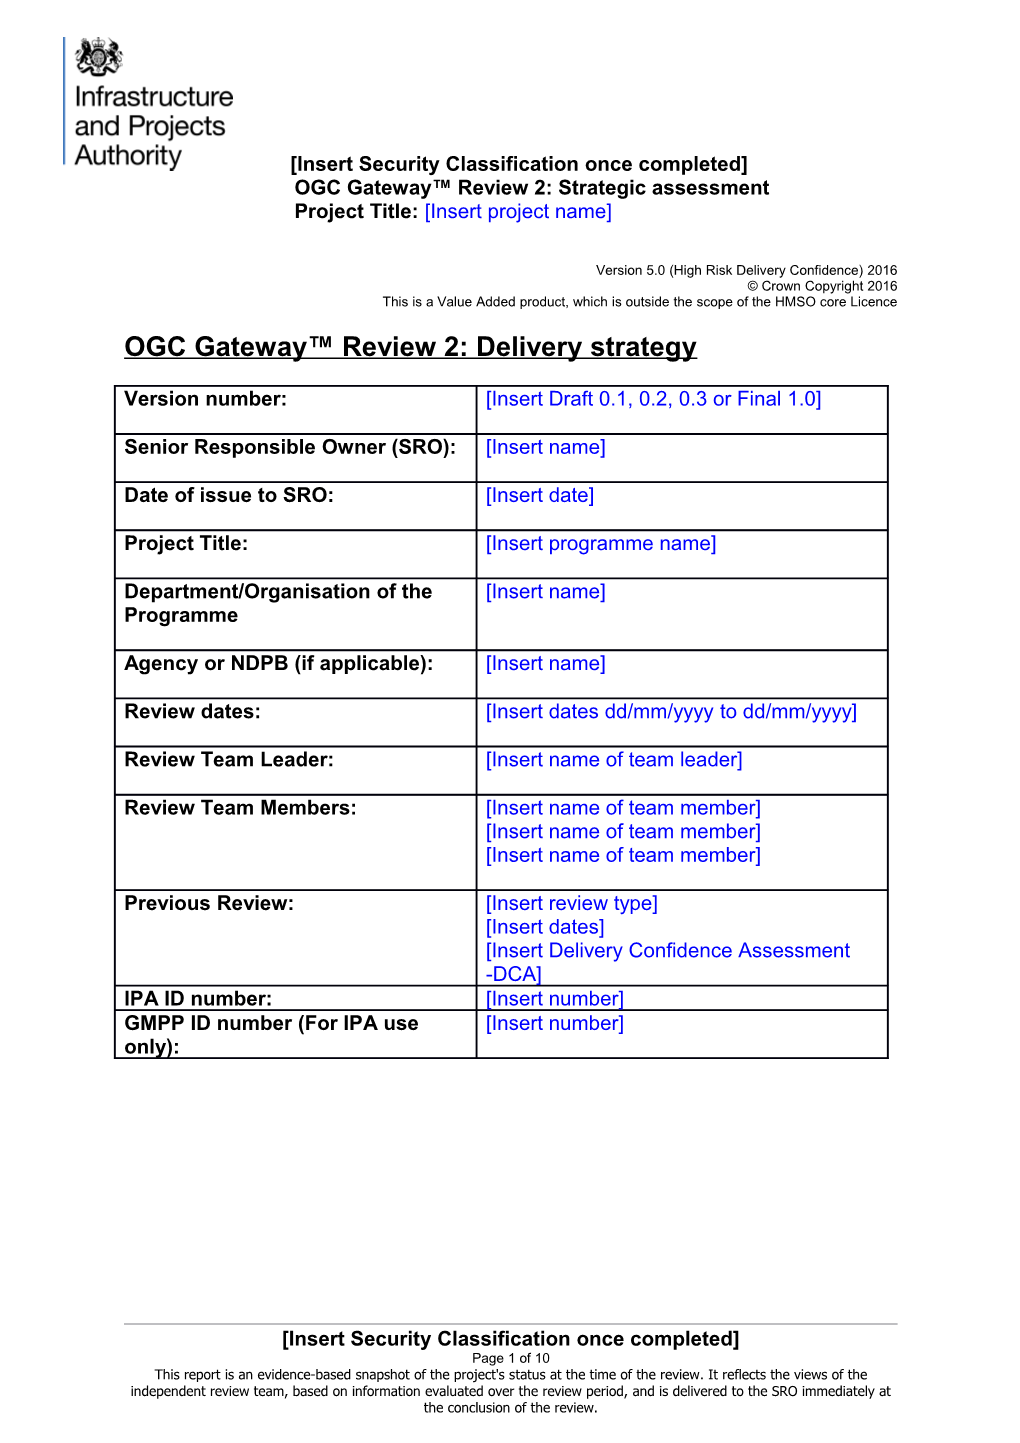 OGC Gateway Review 2: Strategic Assessment